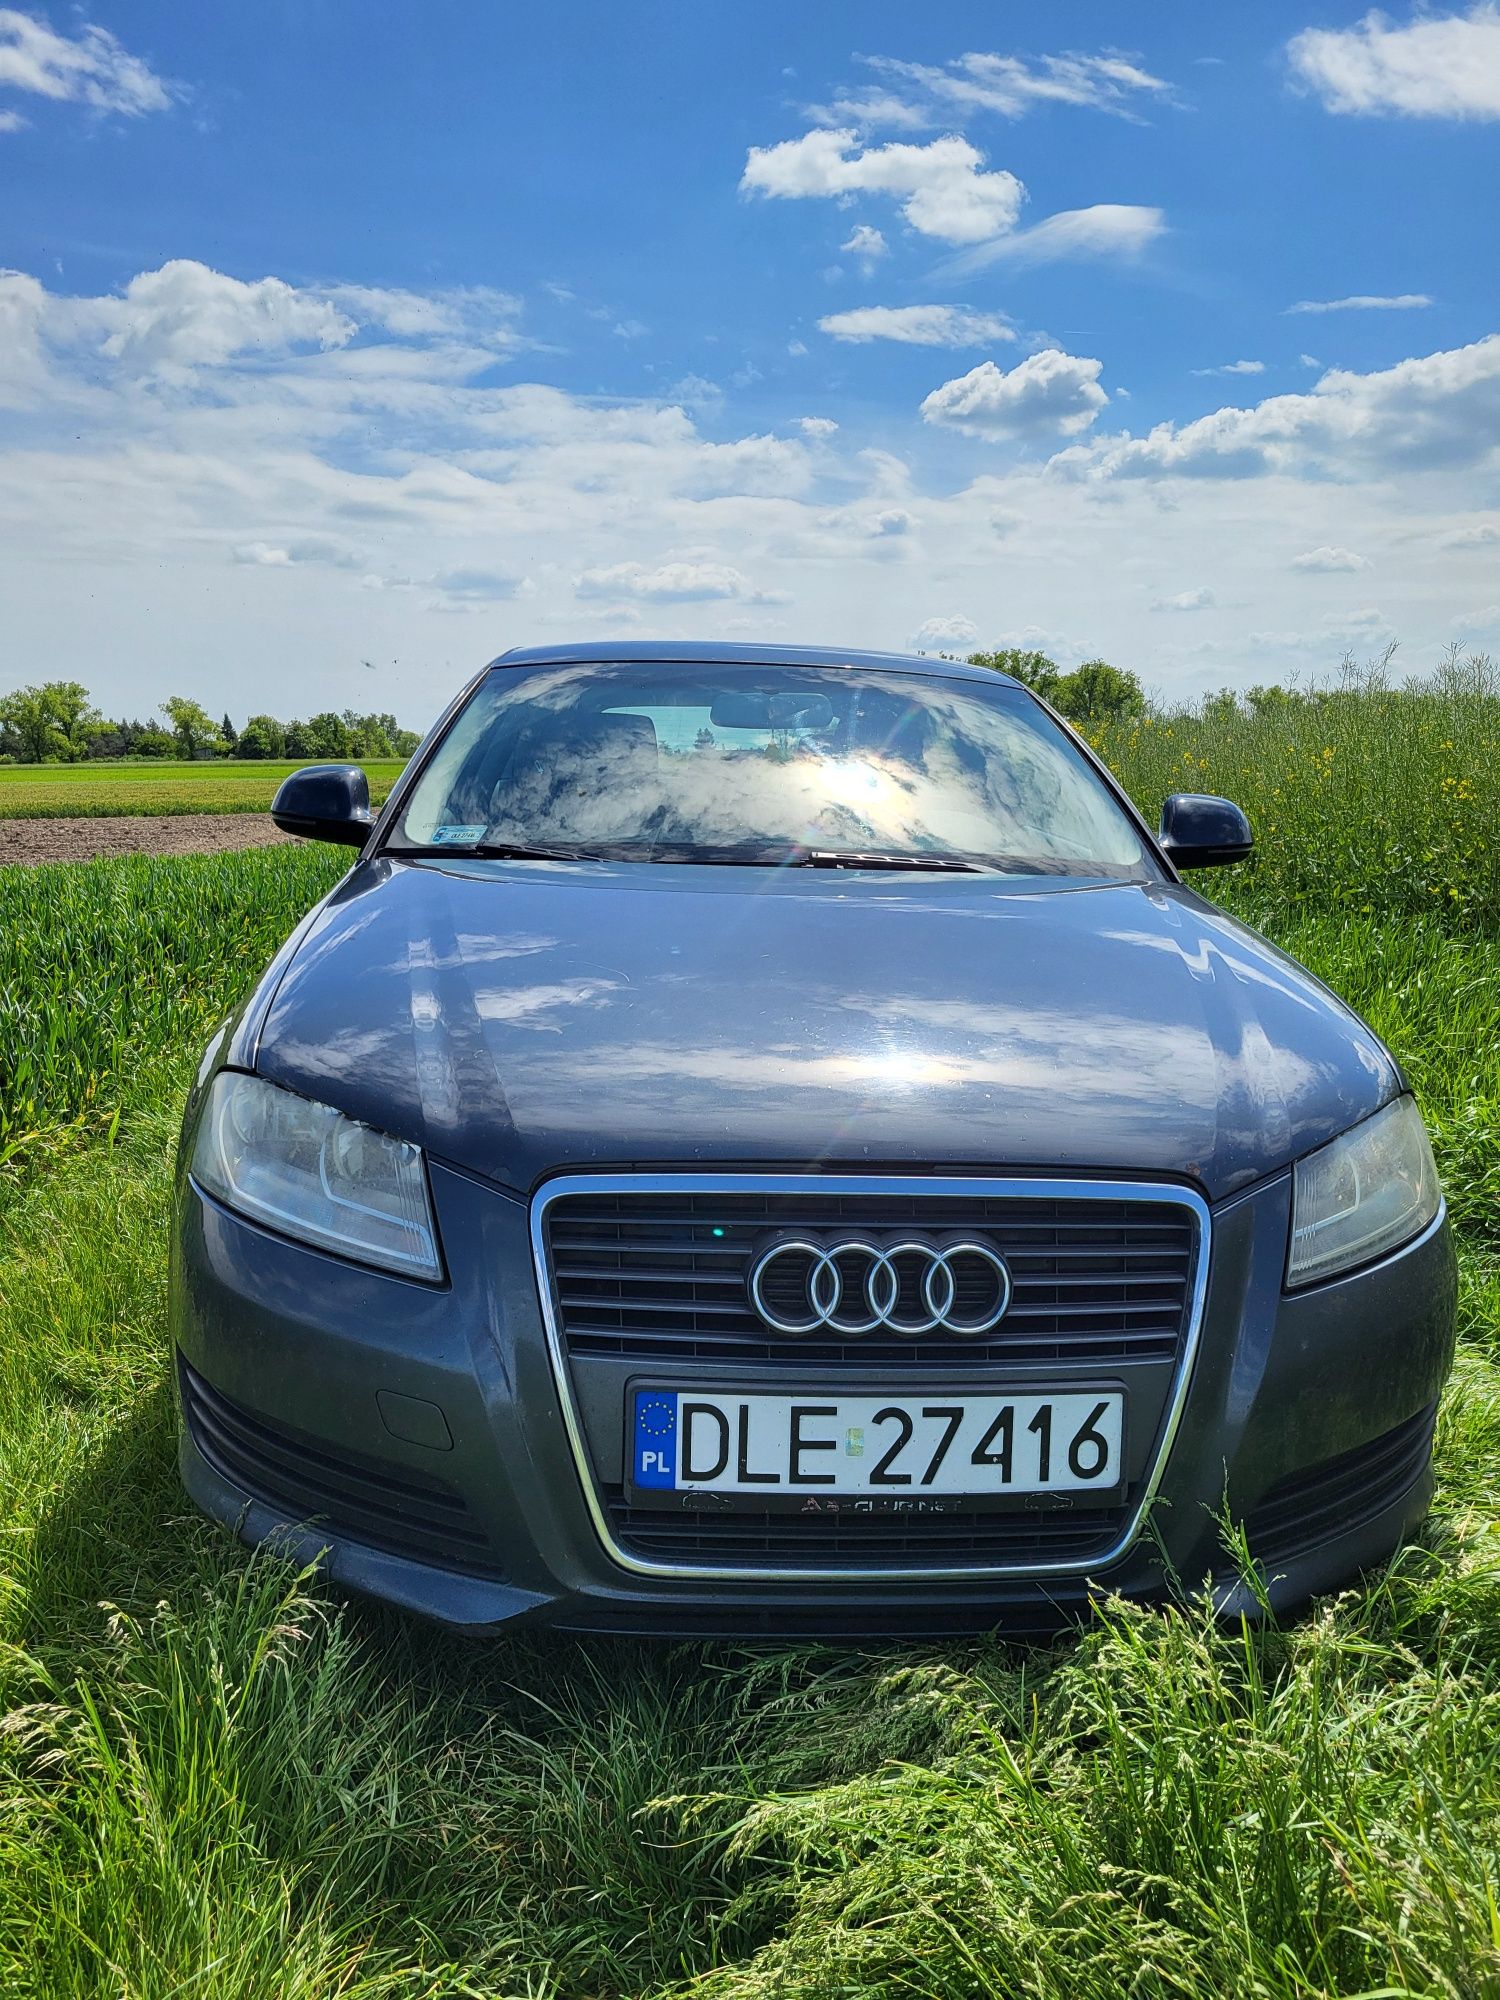 Audi A3 8p 1.9 TDI